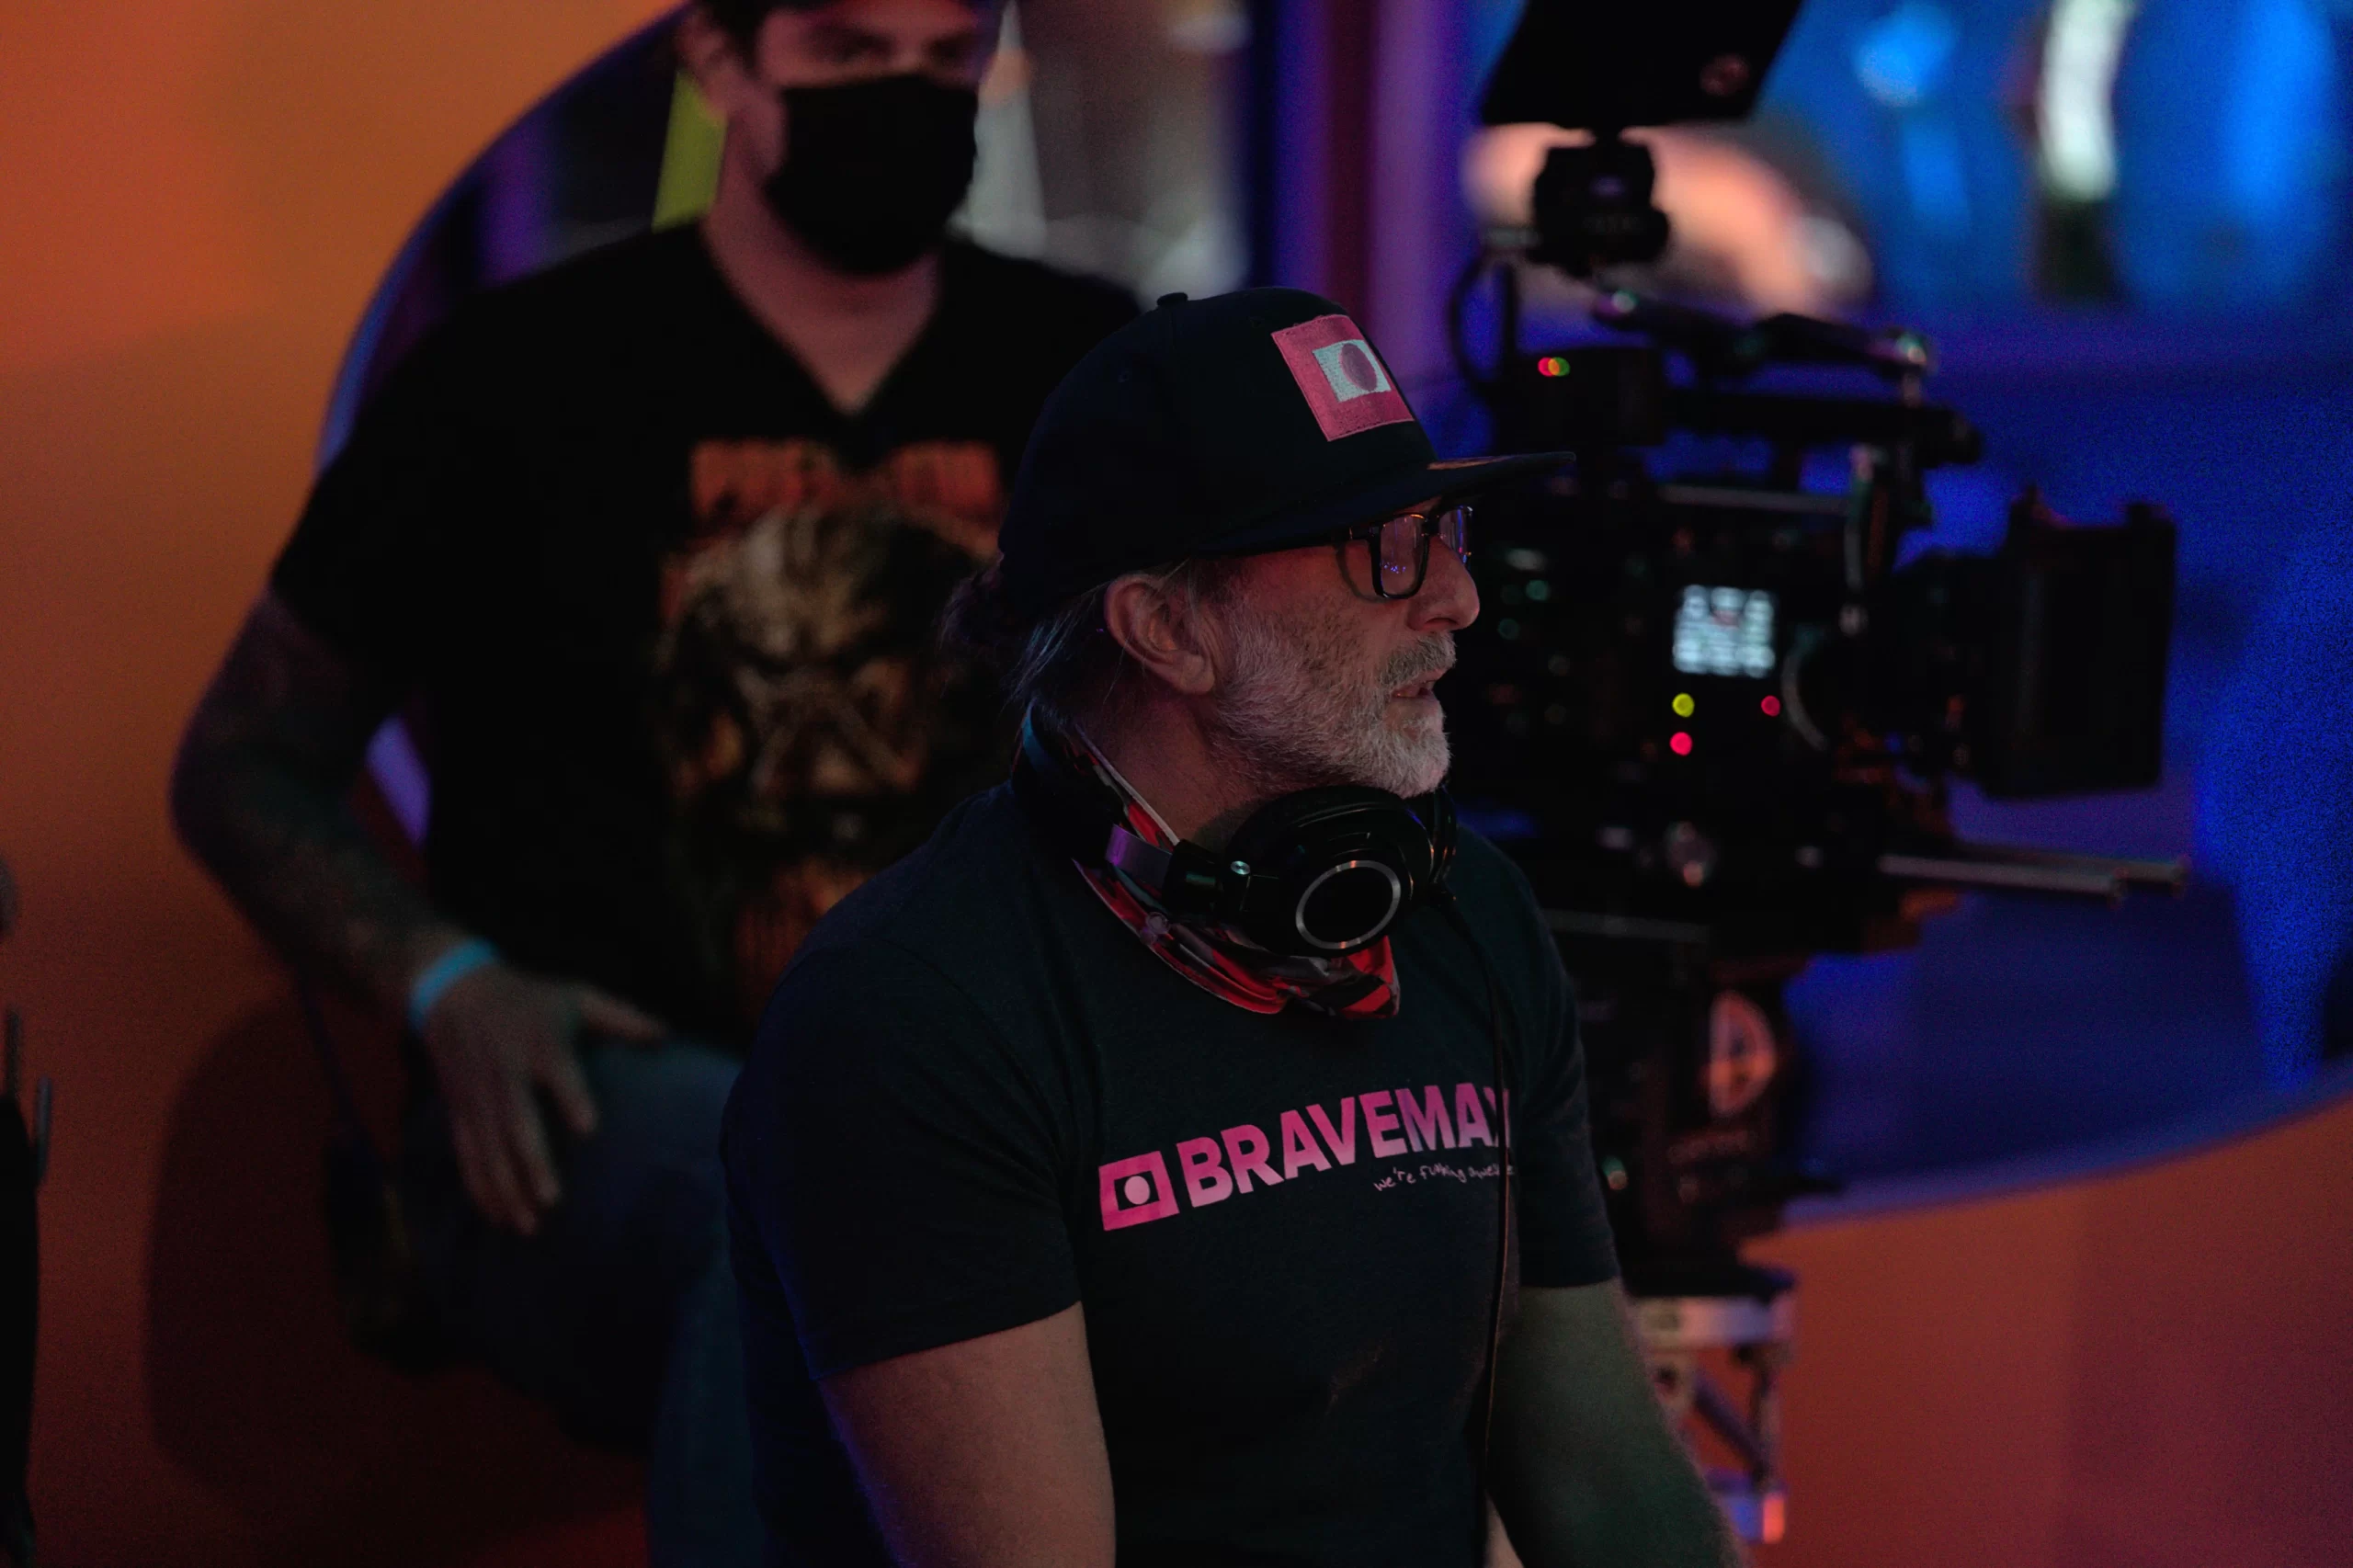 Damian directing on set